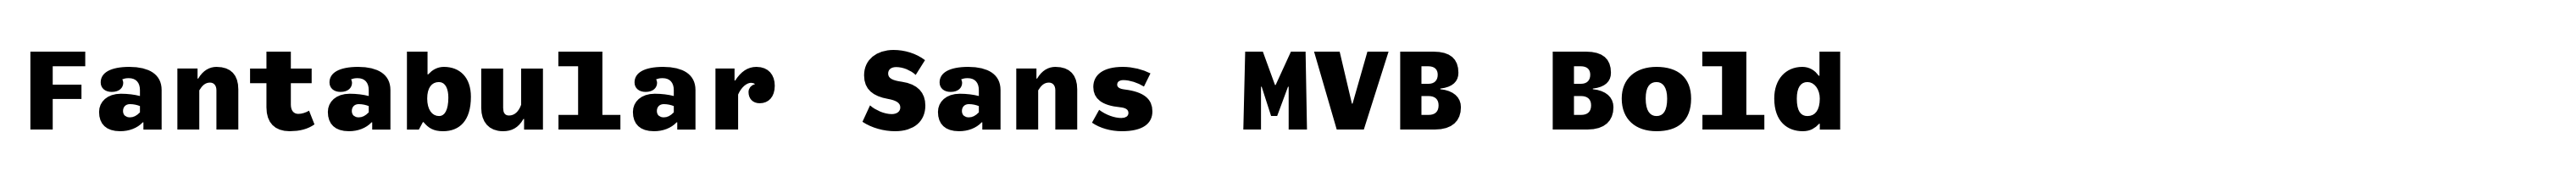 Fantabular Sans MVB Bold